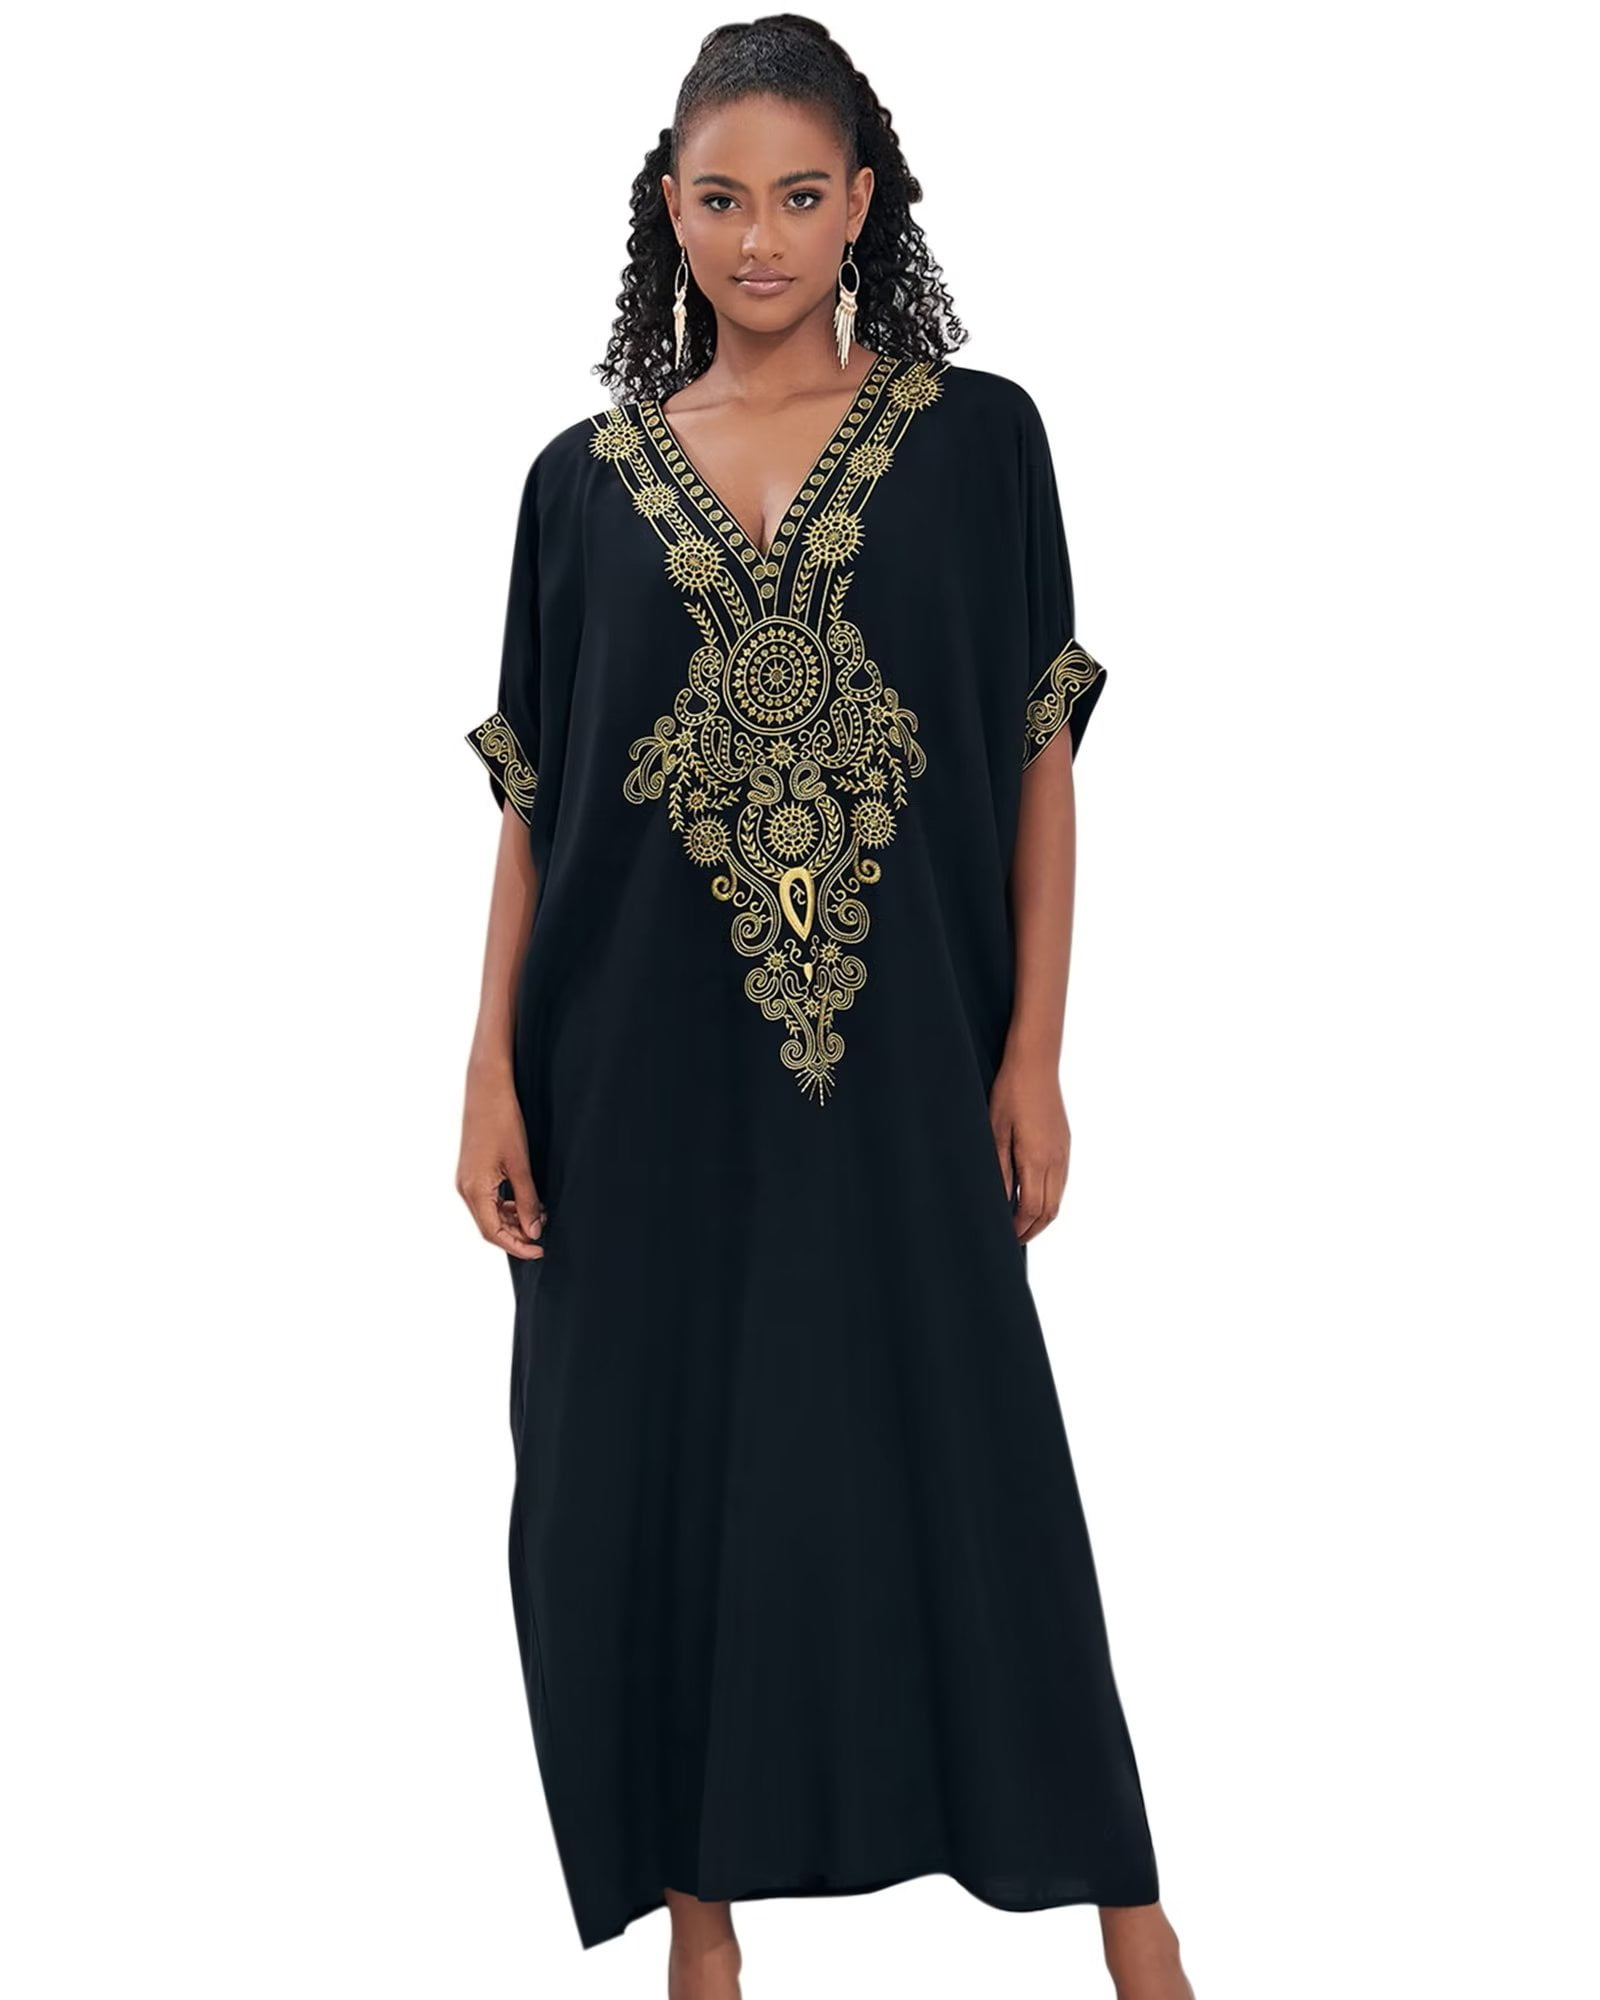 EDOLYNSA Women's Kaftan Cover-up Embroidered Beach Dresses Plus Size ...